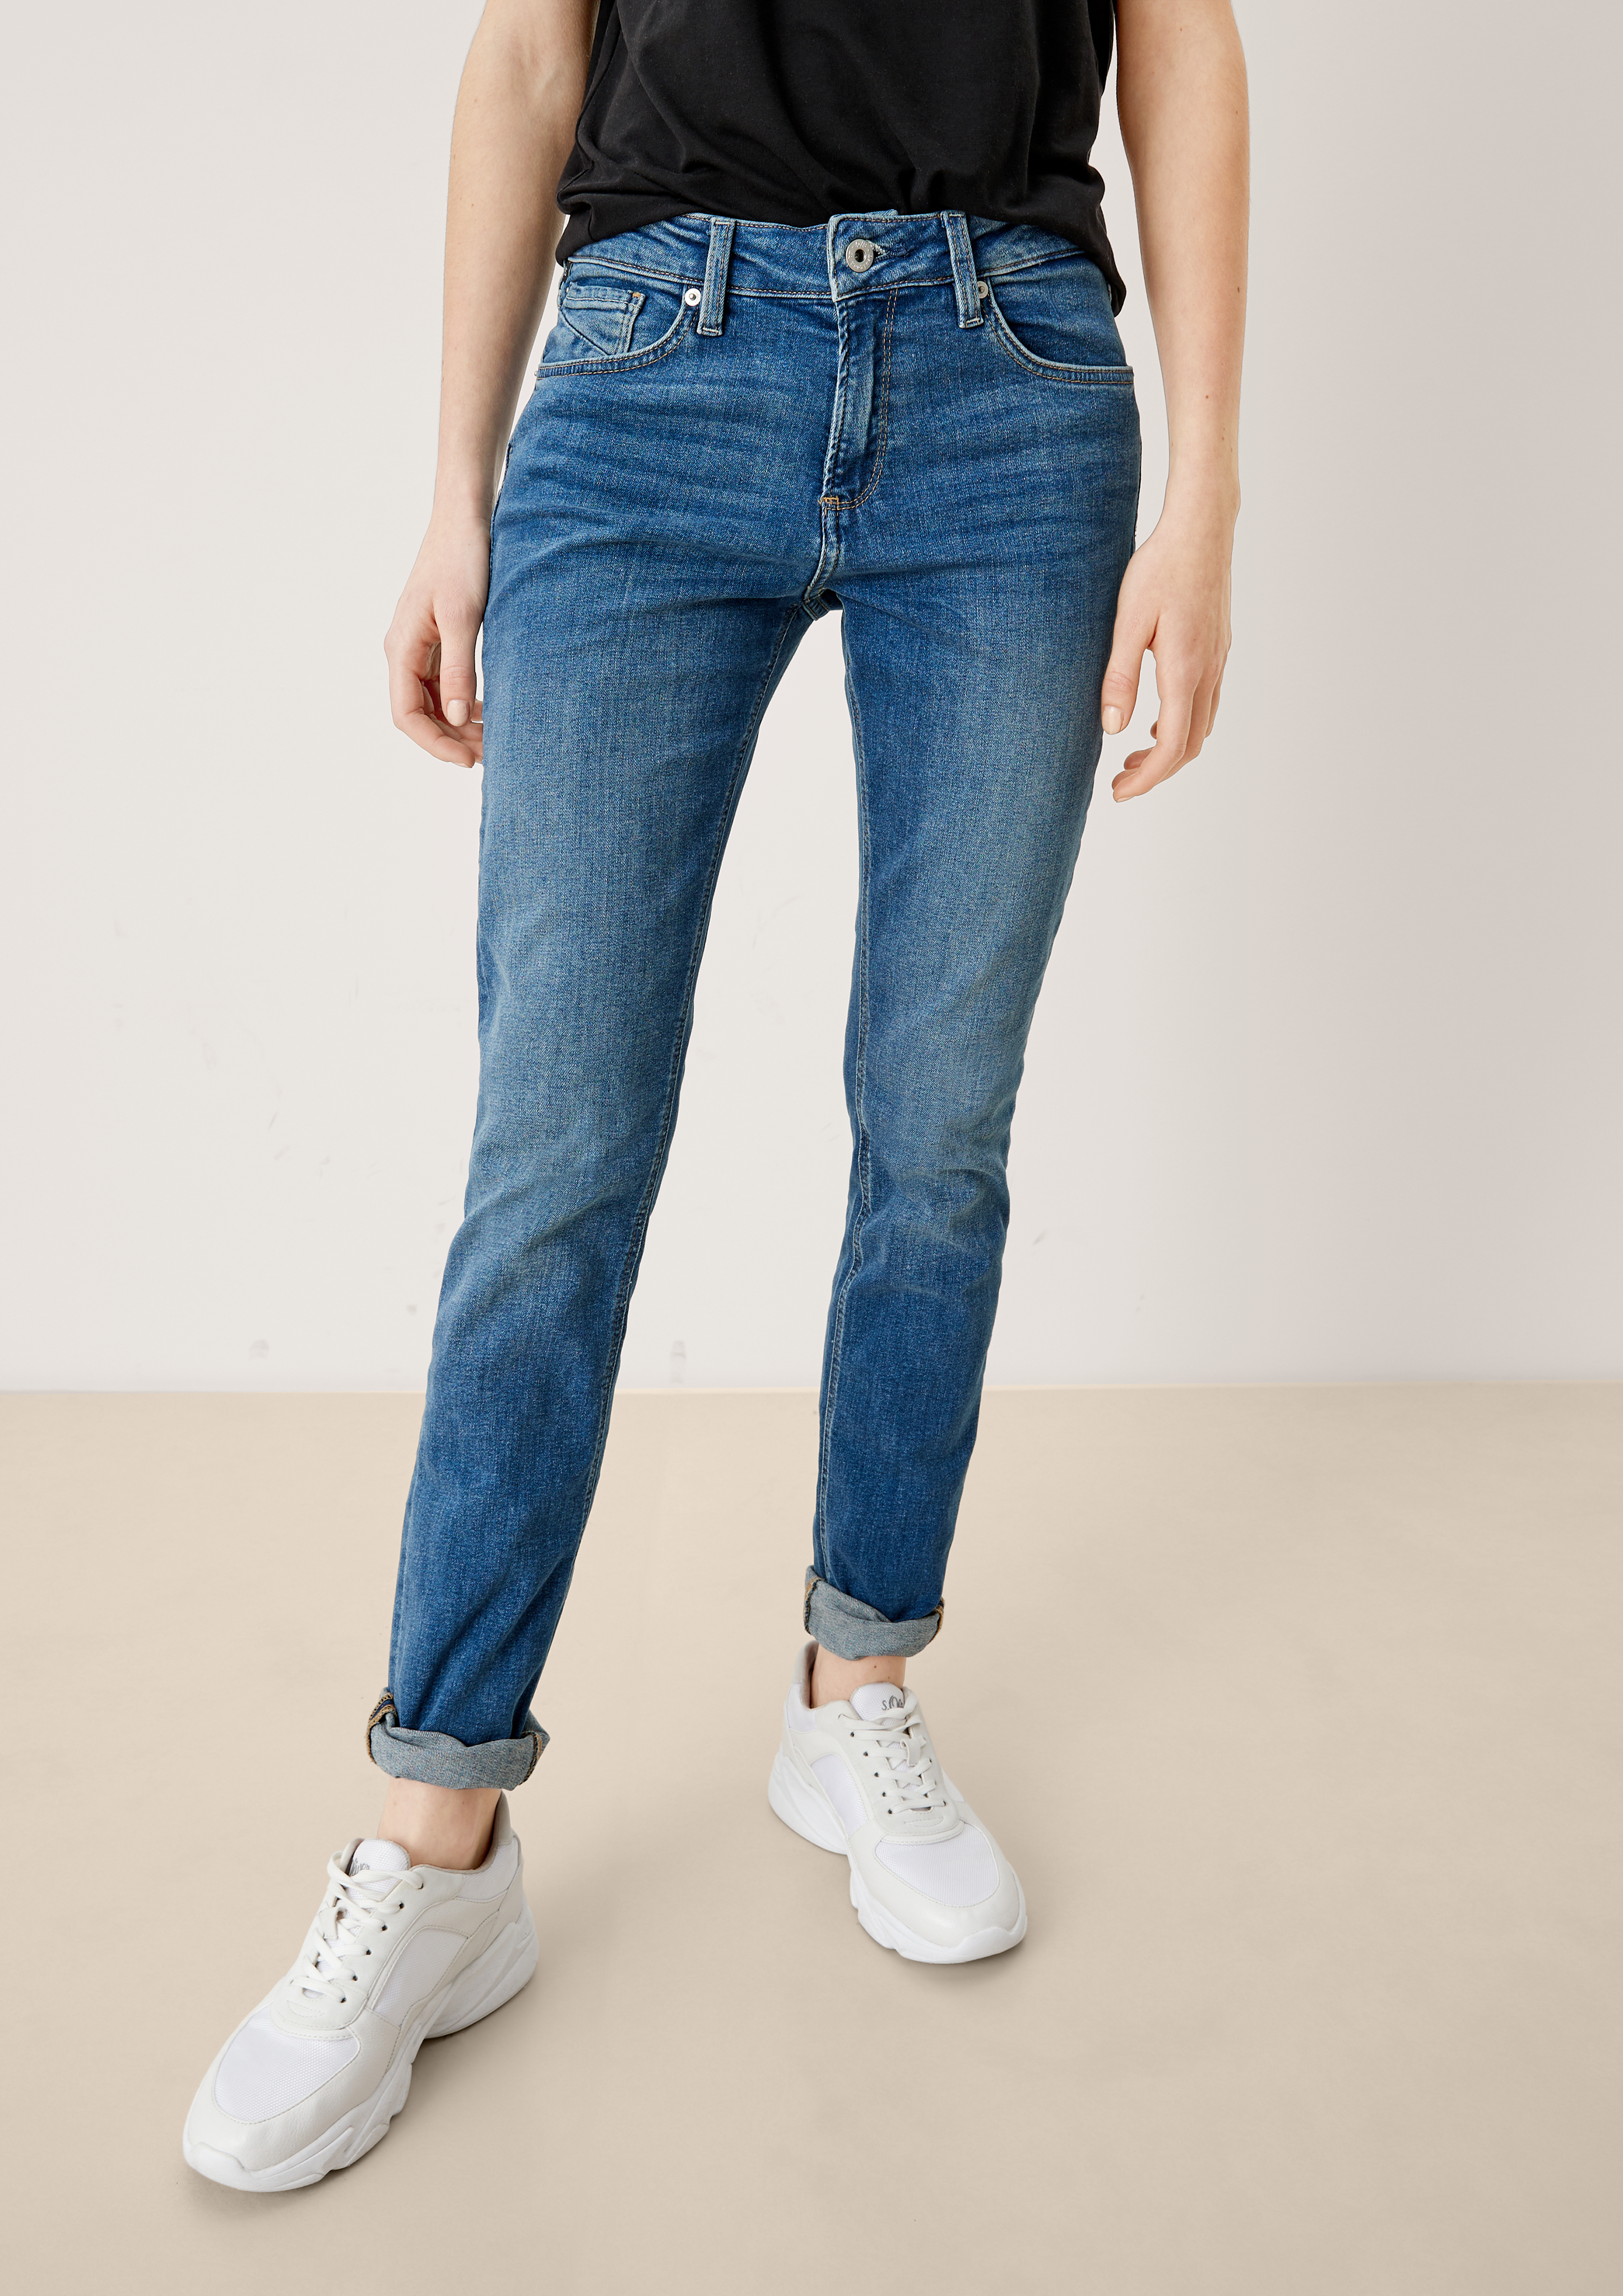 Jeans Catie / Slim Fit / Mid Rise / Slim Leg - blau